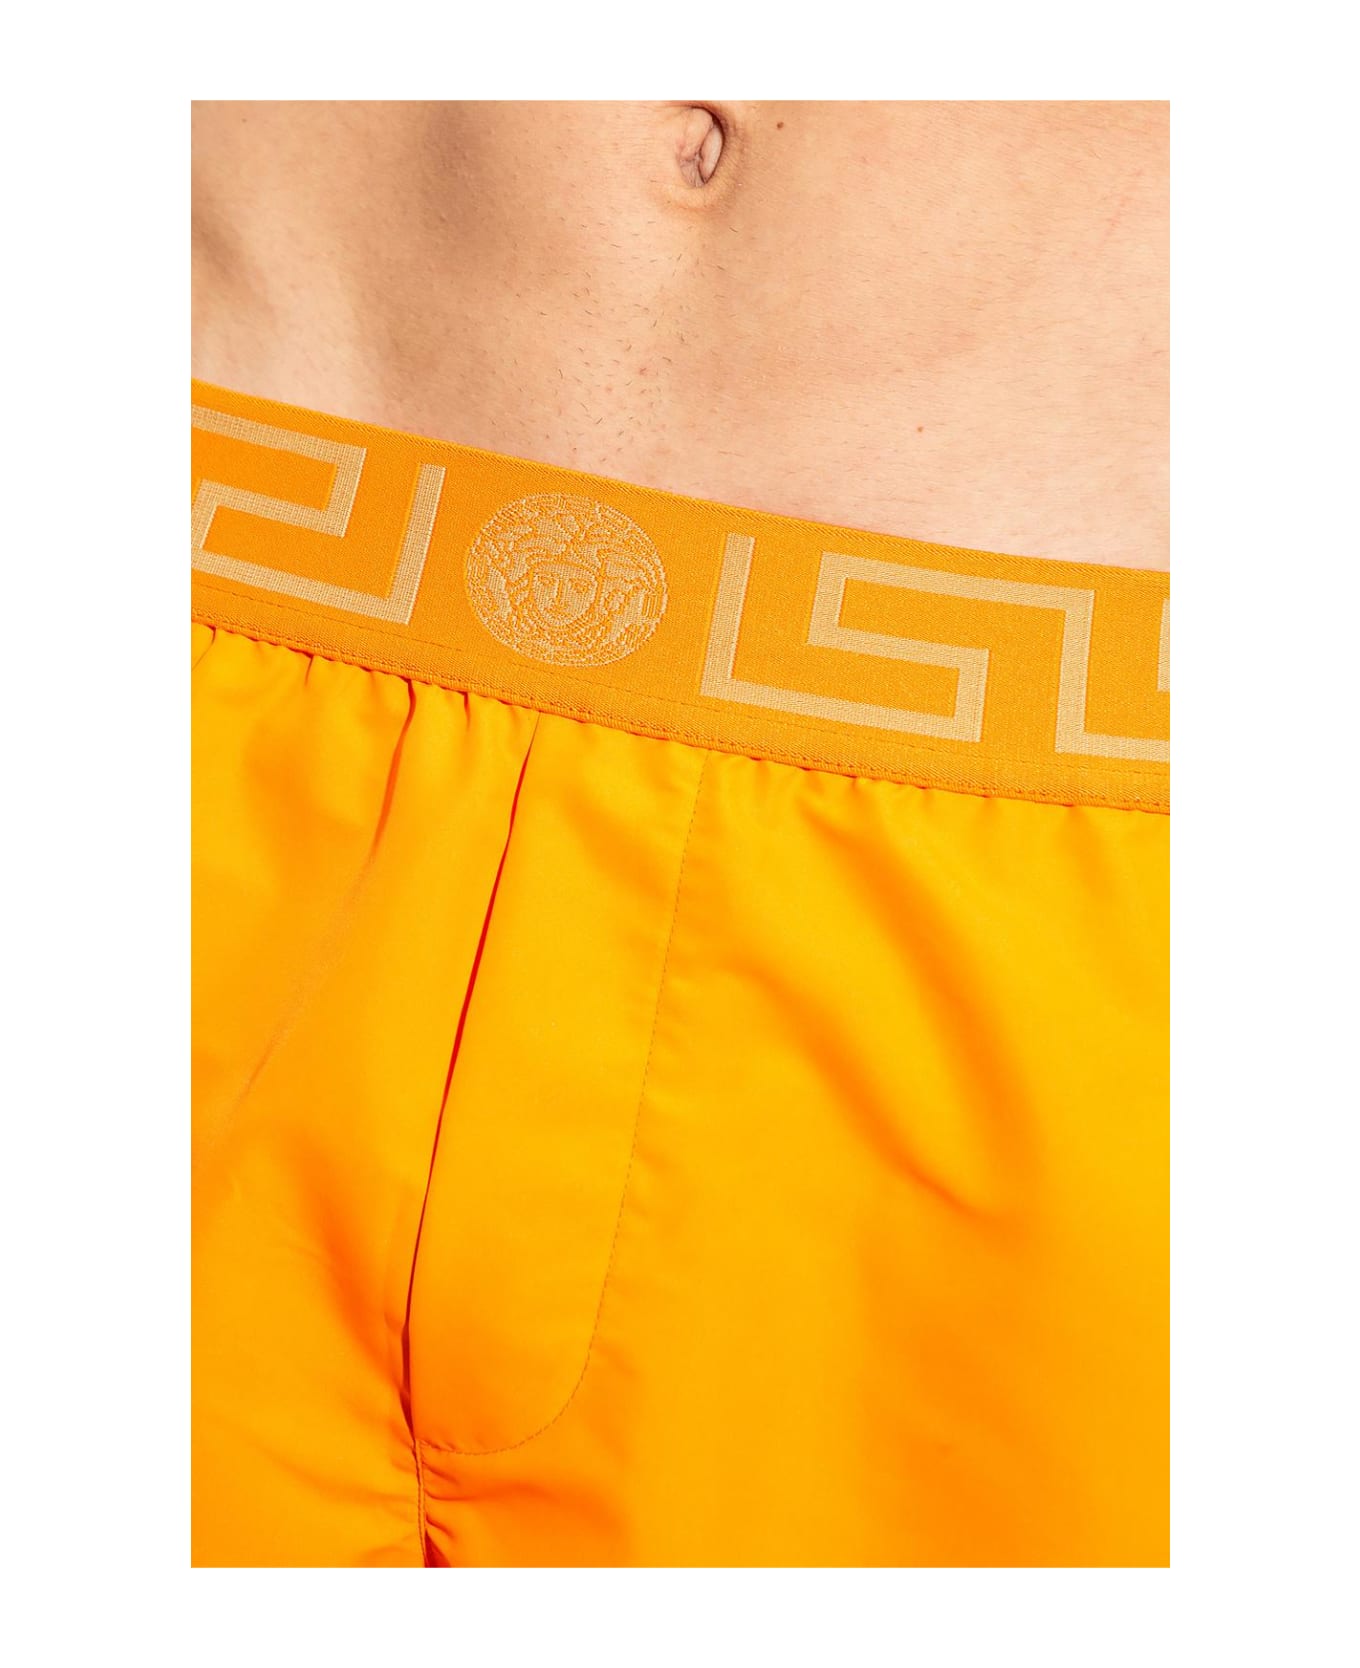 Versace Swimming Shorts - Orange